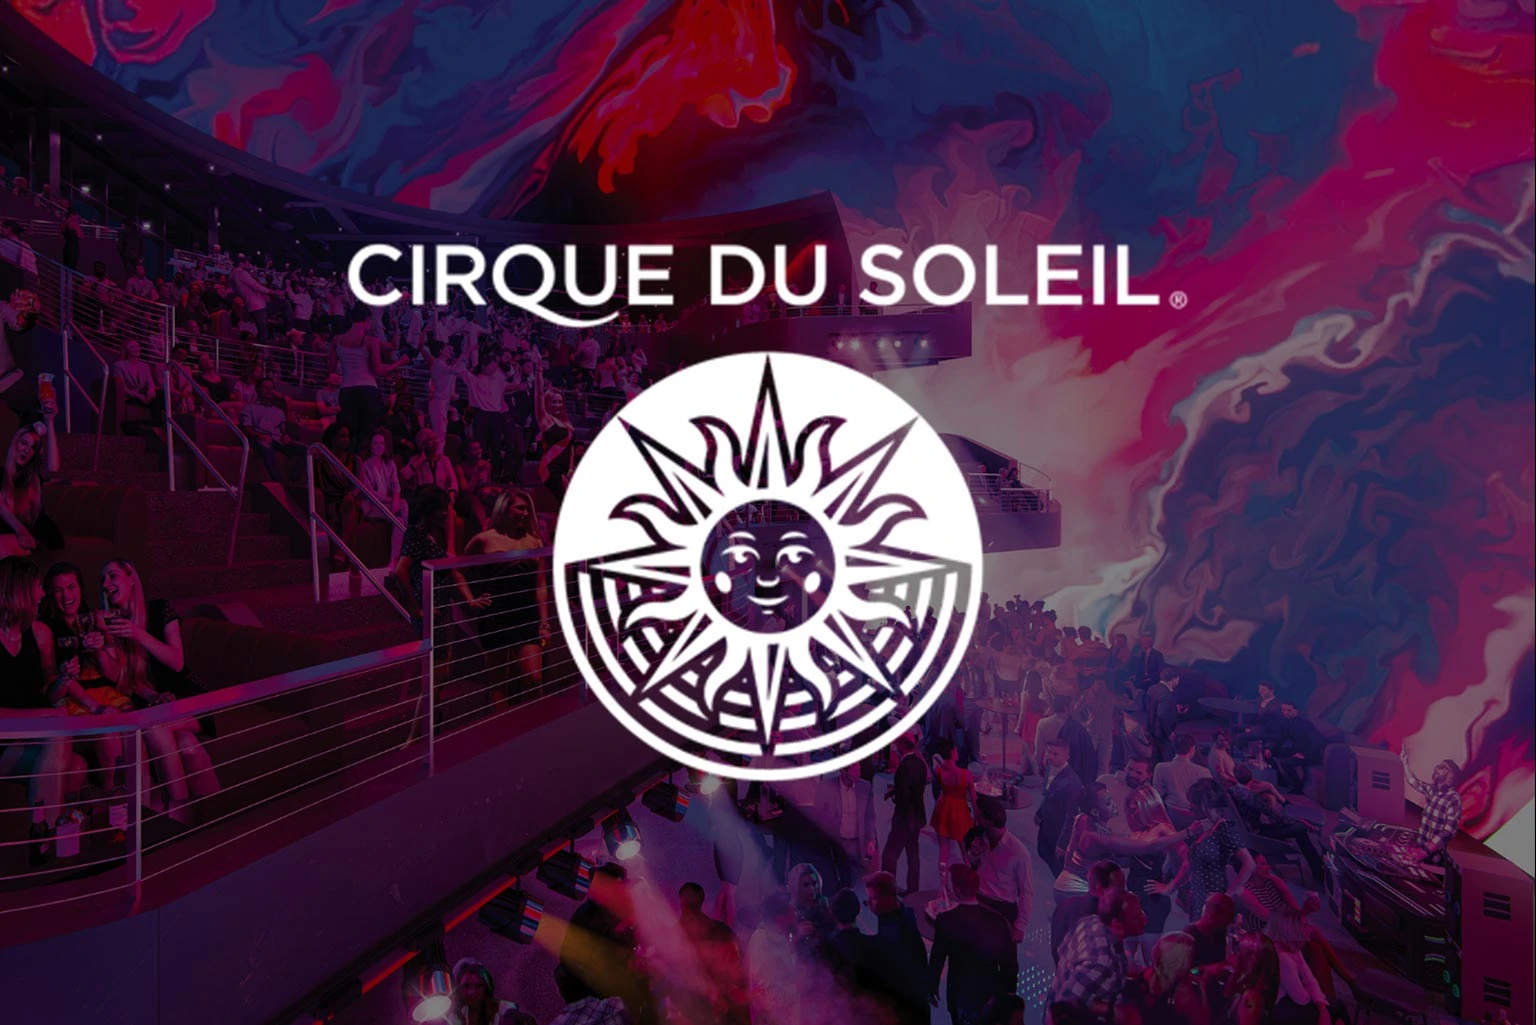 Cirque du Soleil logo on dome rendering